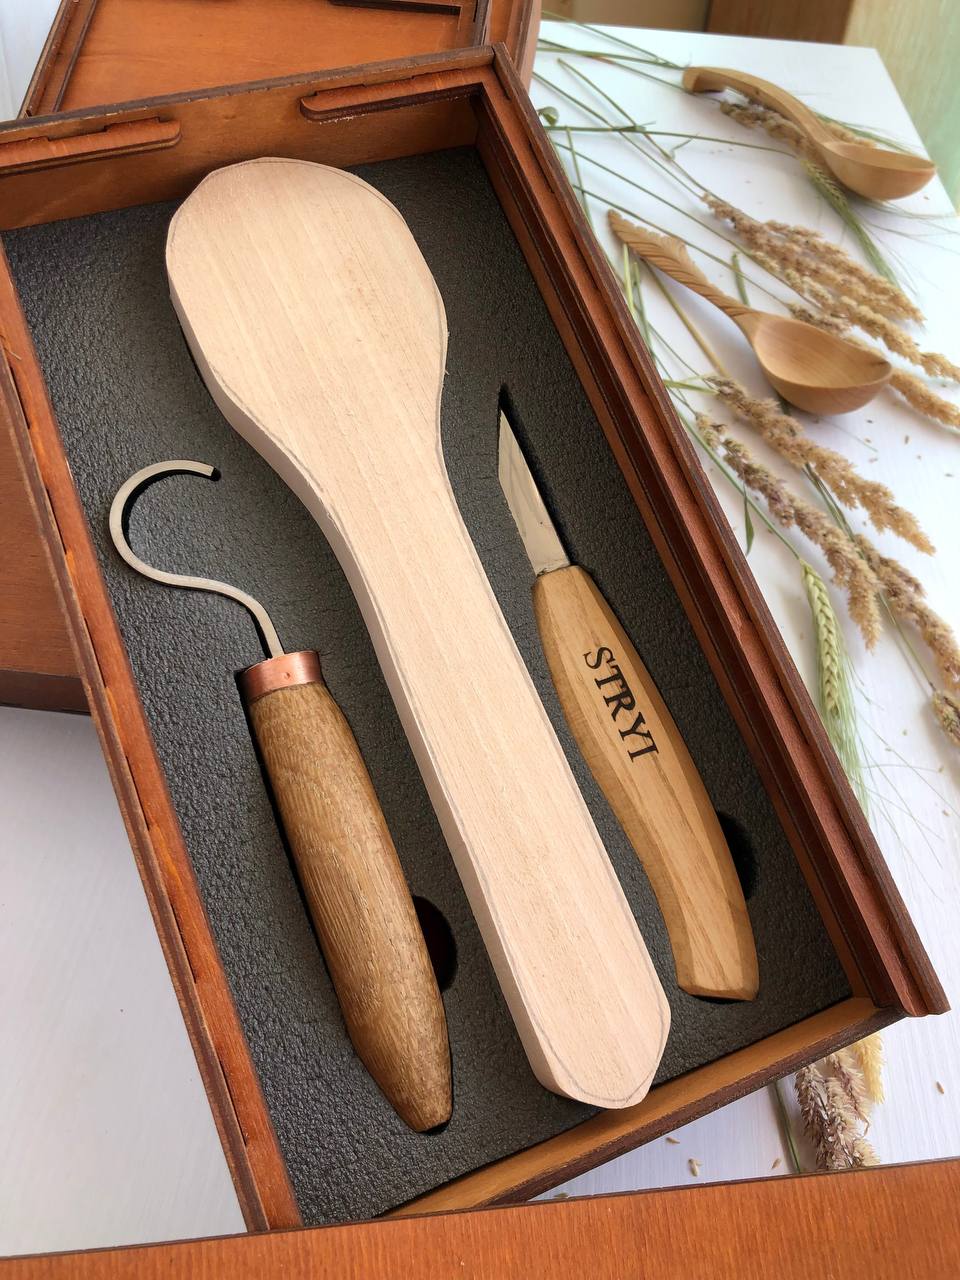 Spoon Bowl Kuksa Carving Hook Knife 50mm STRYI Profi